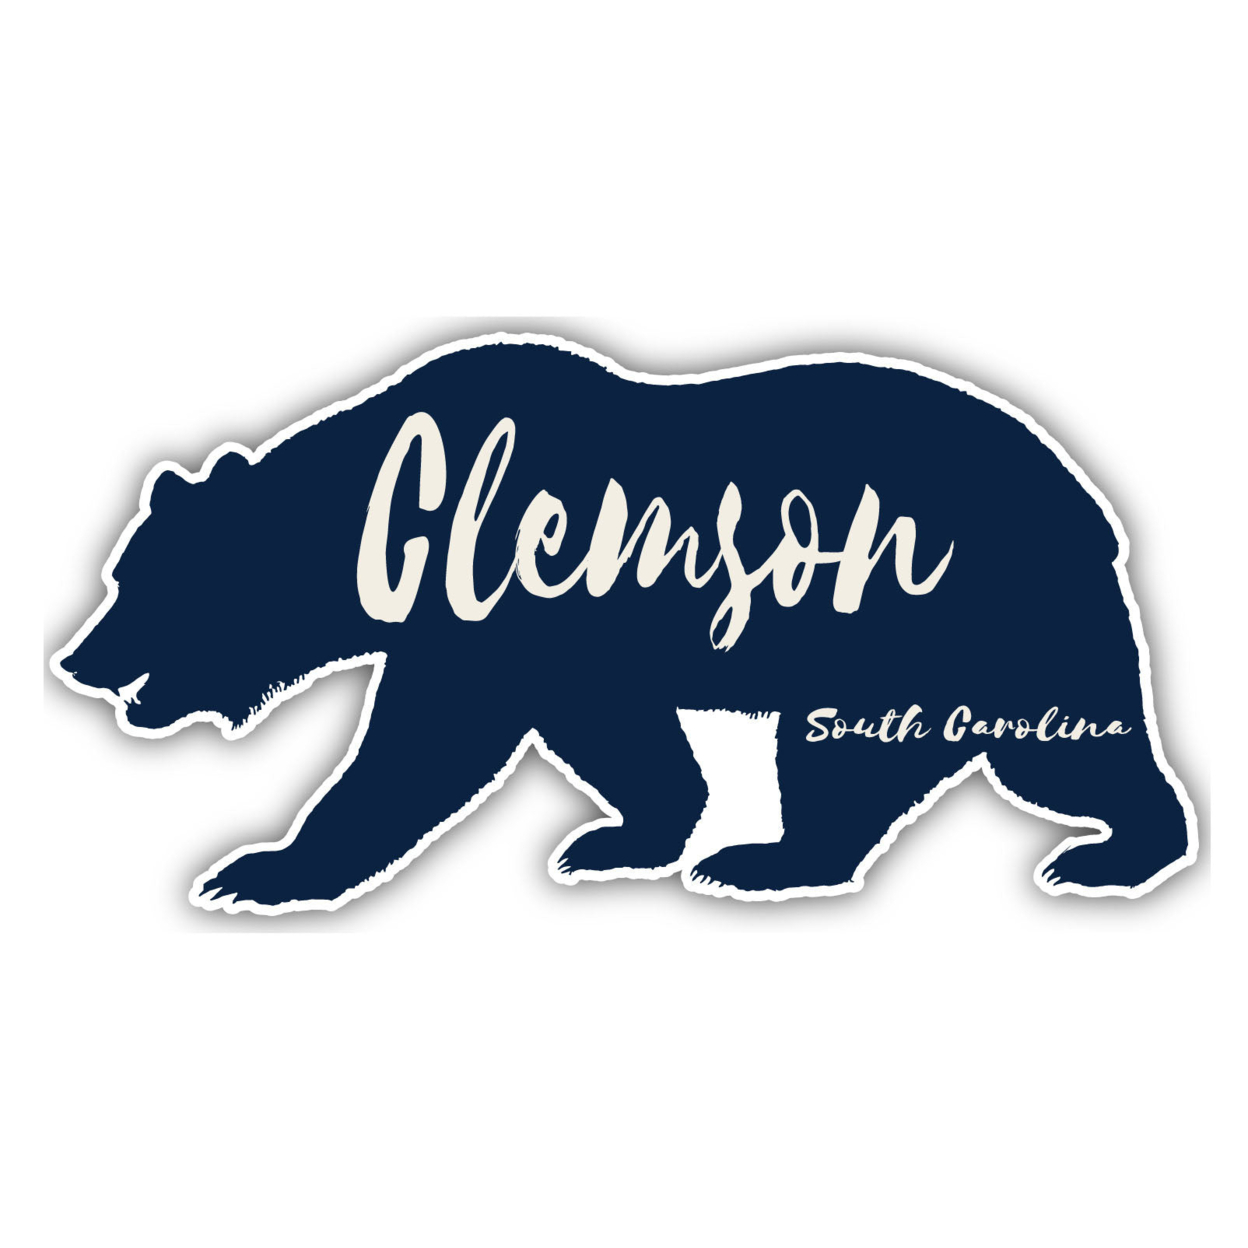 Clemson South Carolina Souvenir Decorative Stickers (Choose Theme And Size) - Single Unit, 6-Inch, Bear